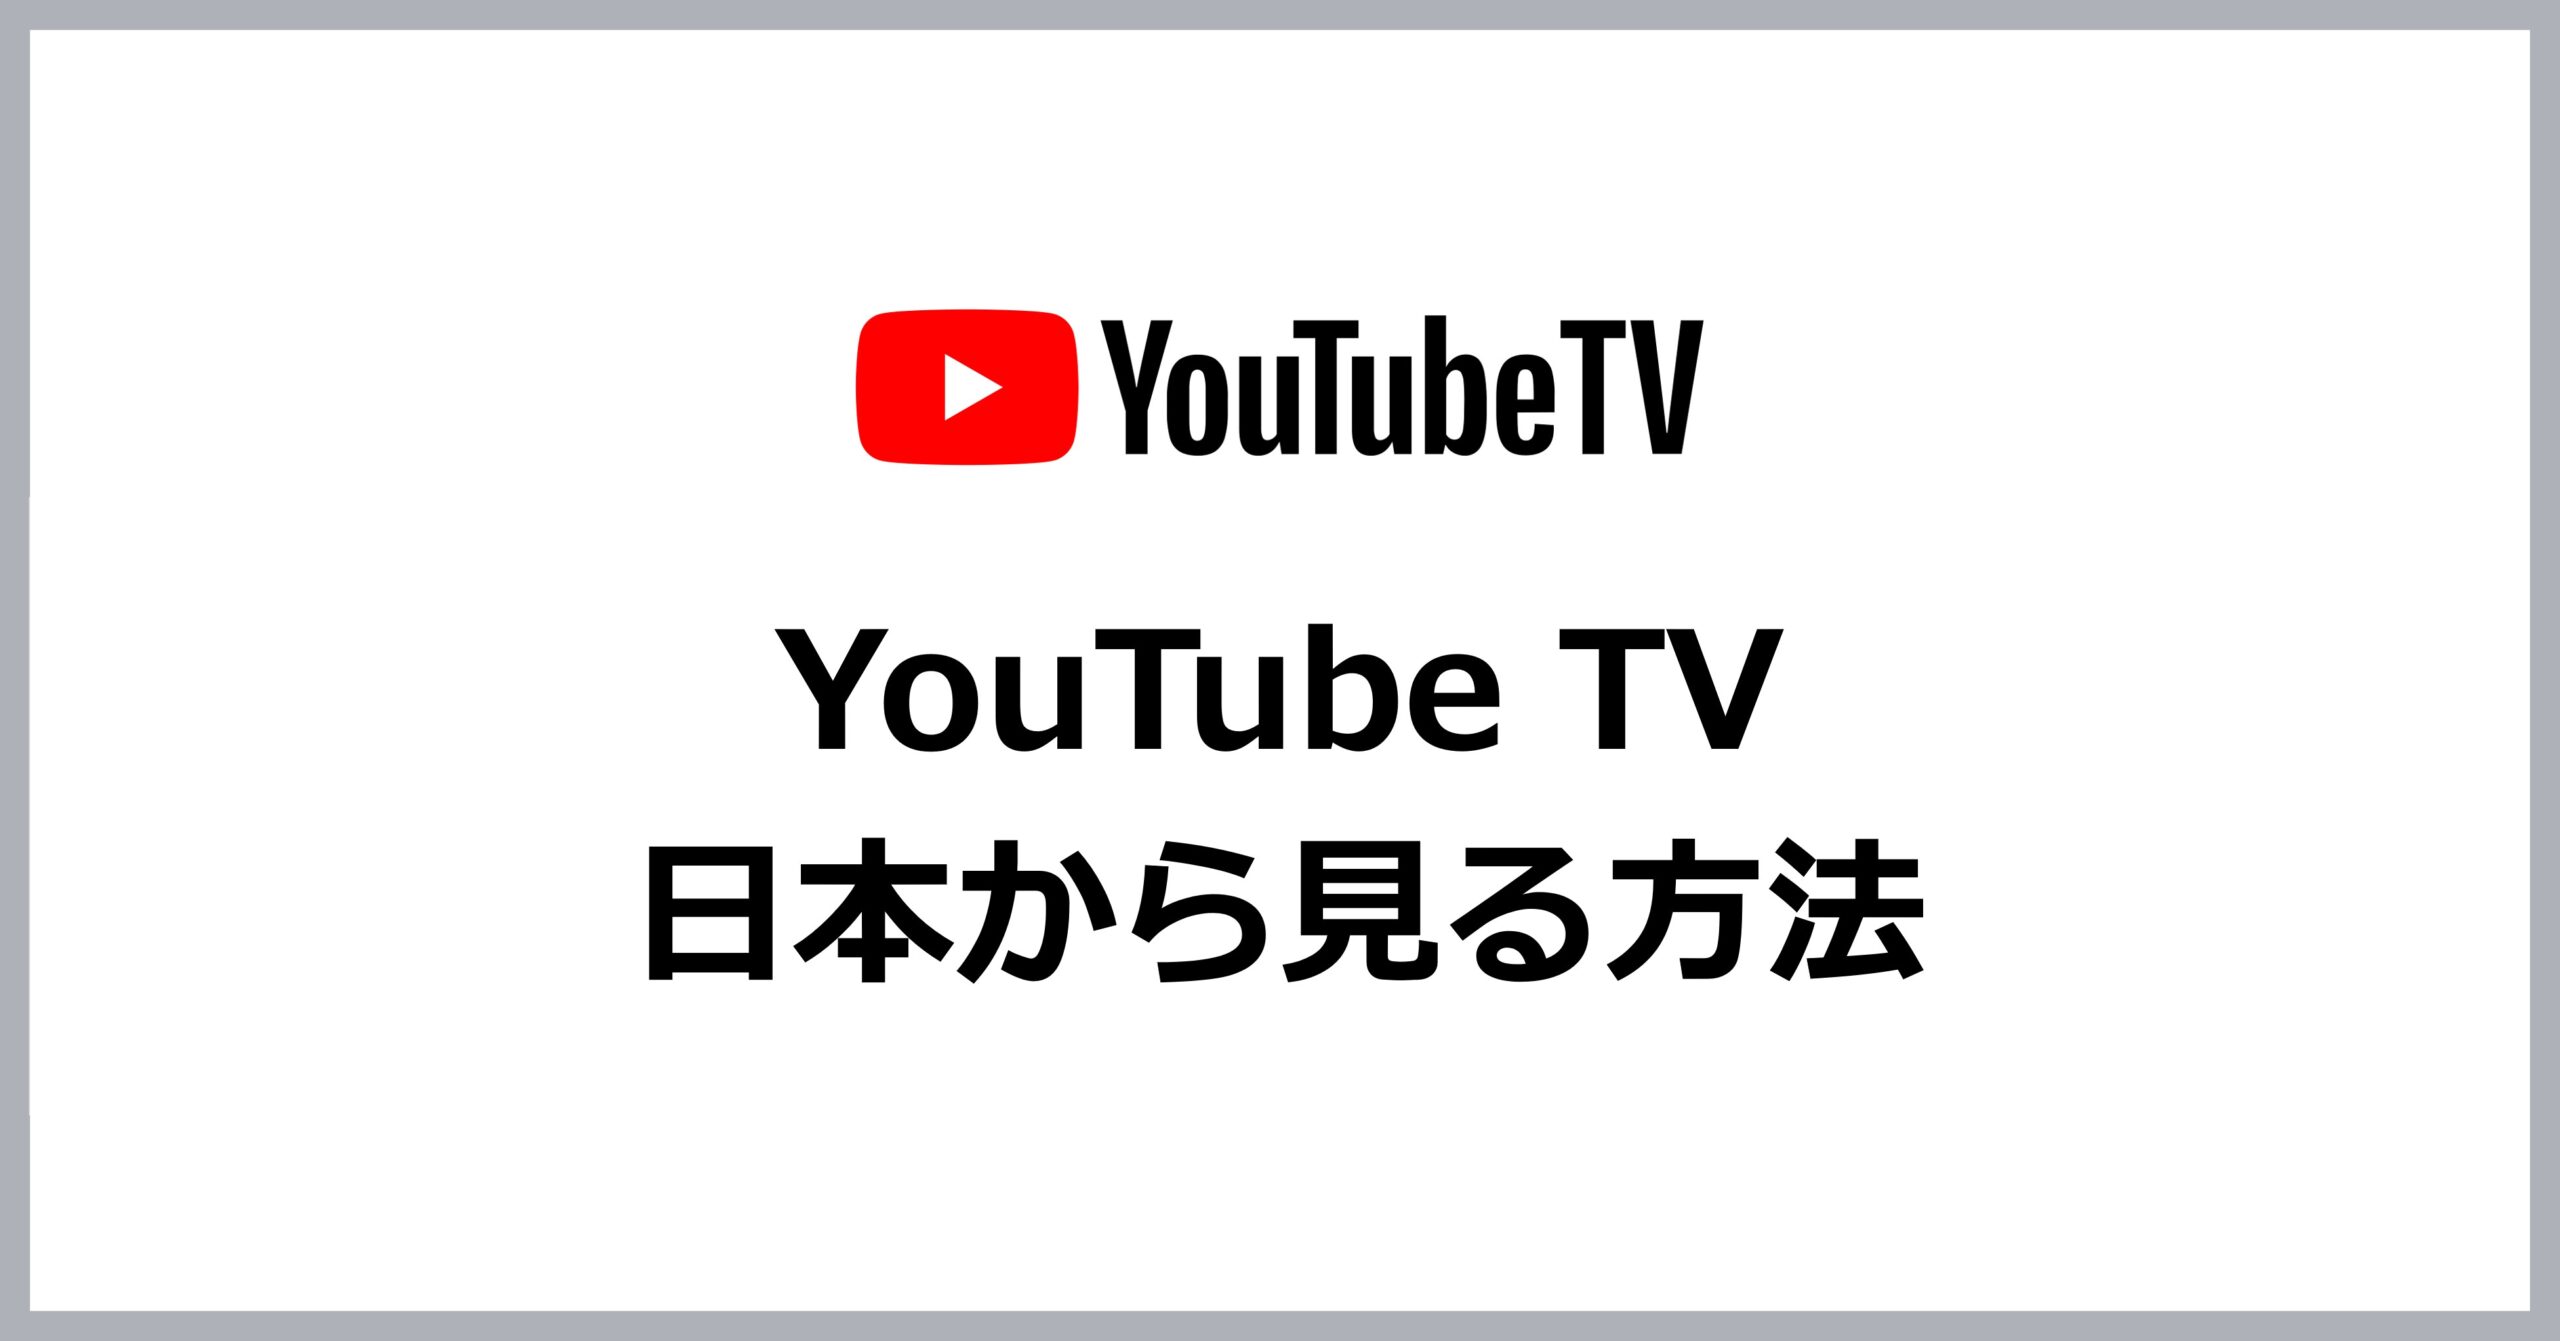 YouTube TVを日本で見る方法